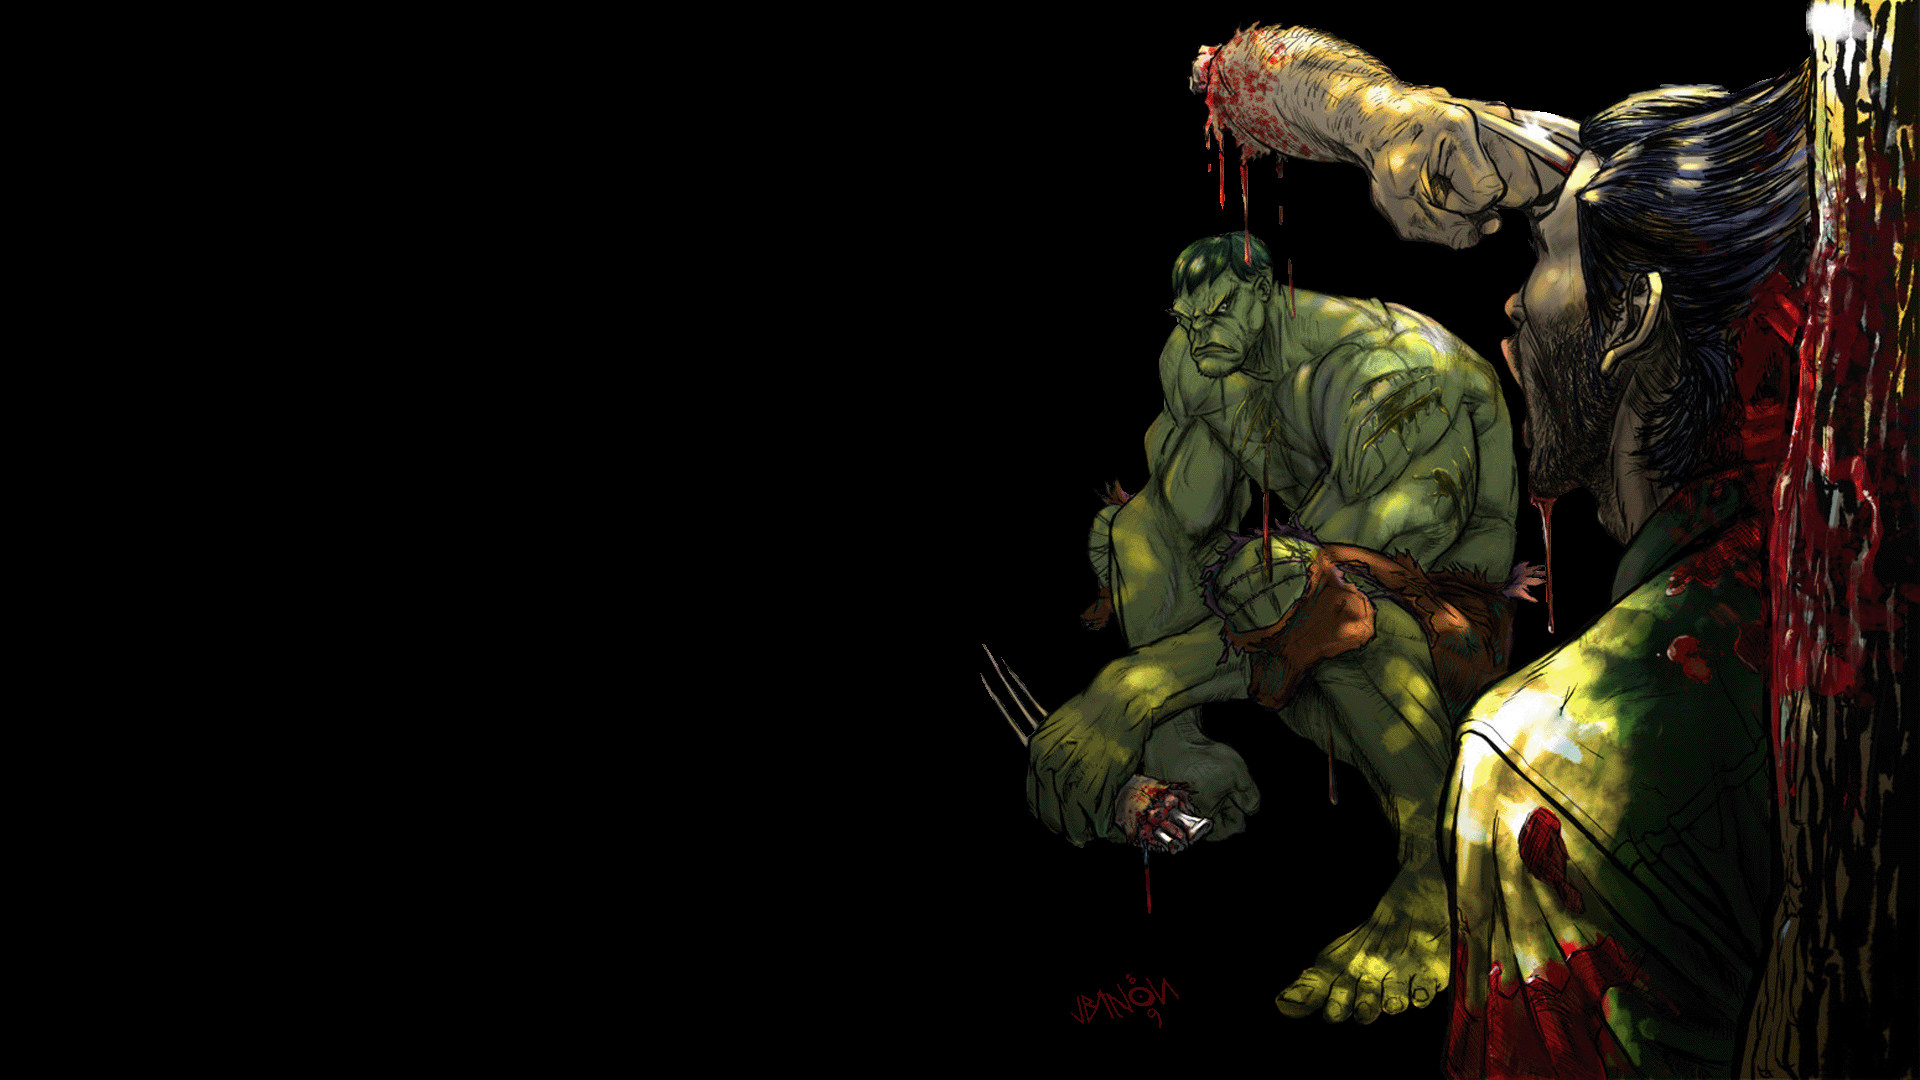 Wolverine Vs Hulk Wallpaper Hd - 1920x1080 Wallpaper 